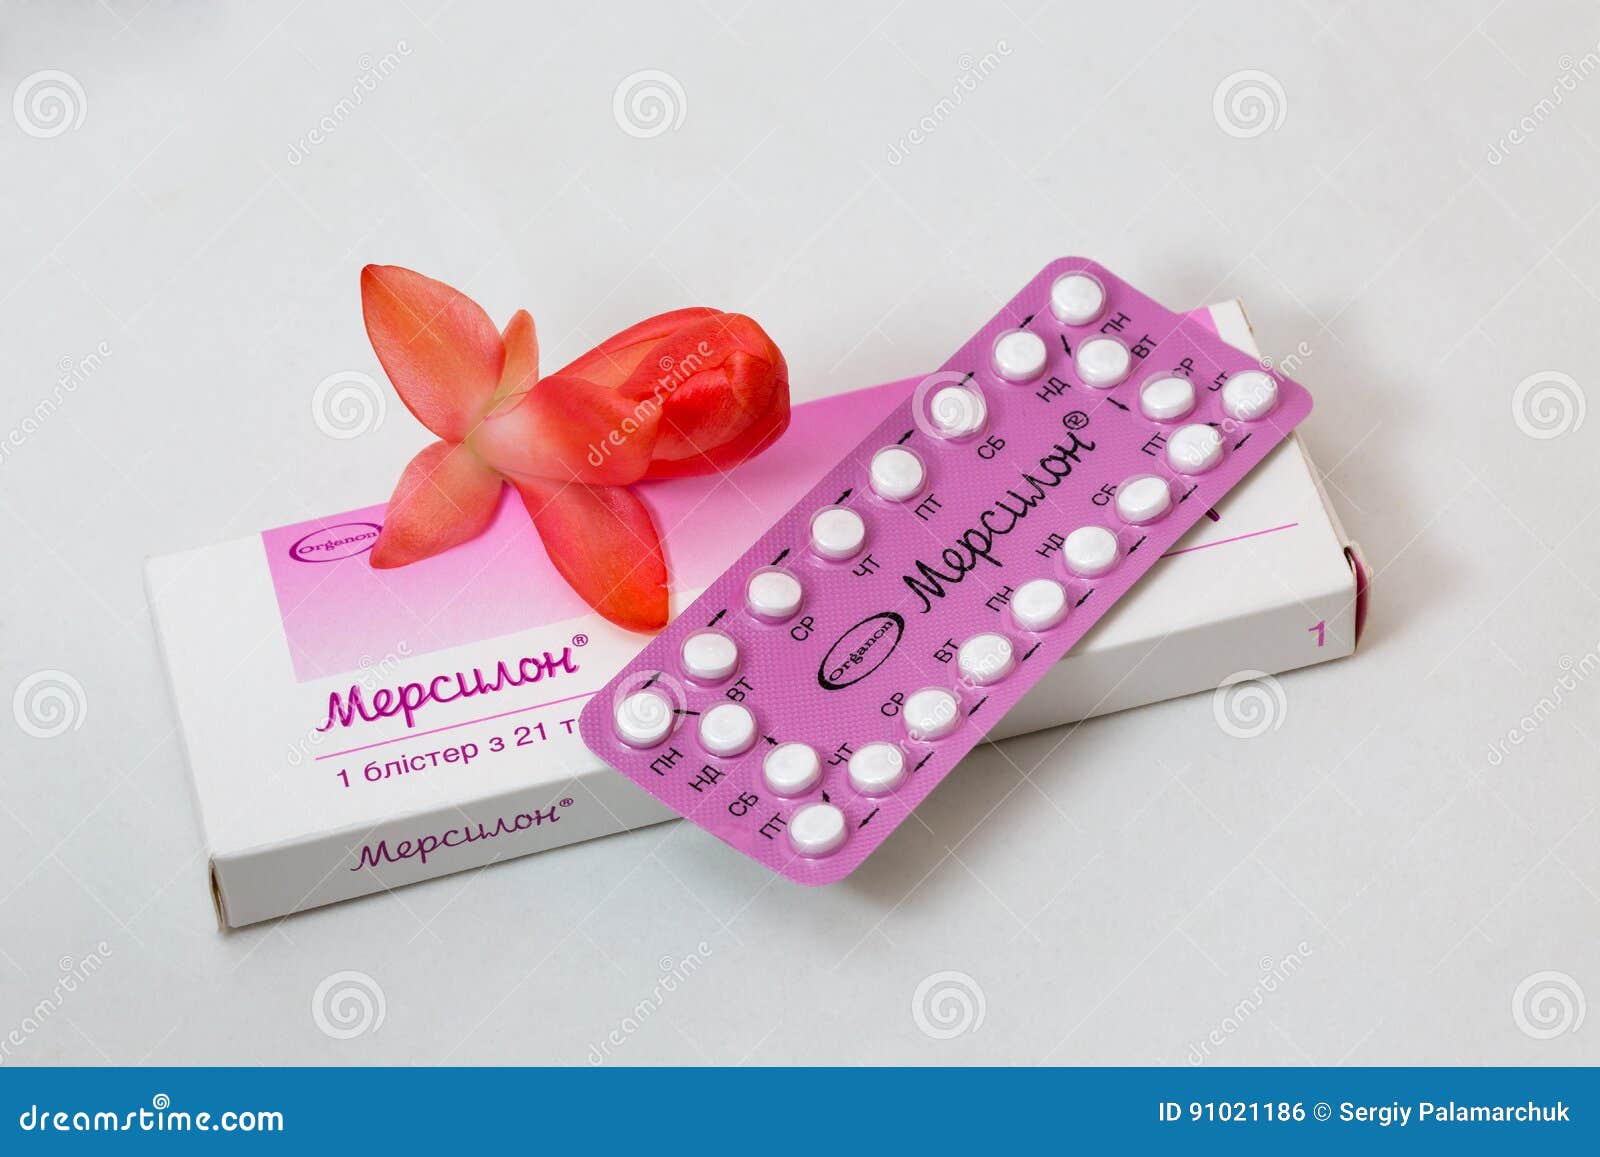 pilule contraceptive hormonale i varicoza